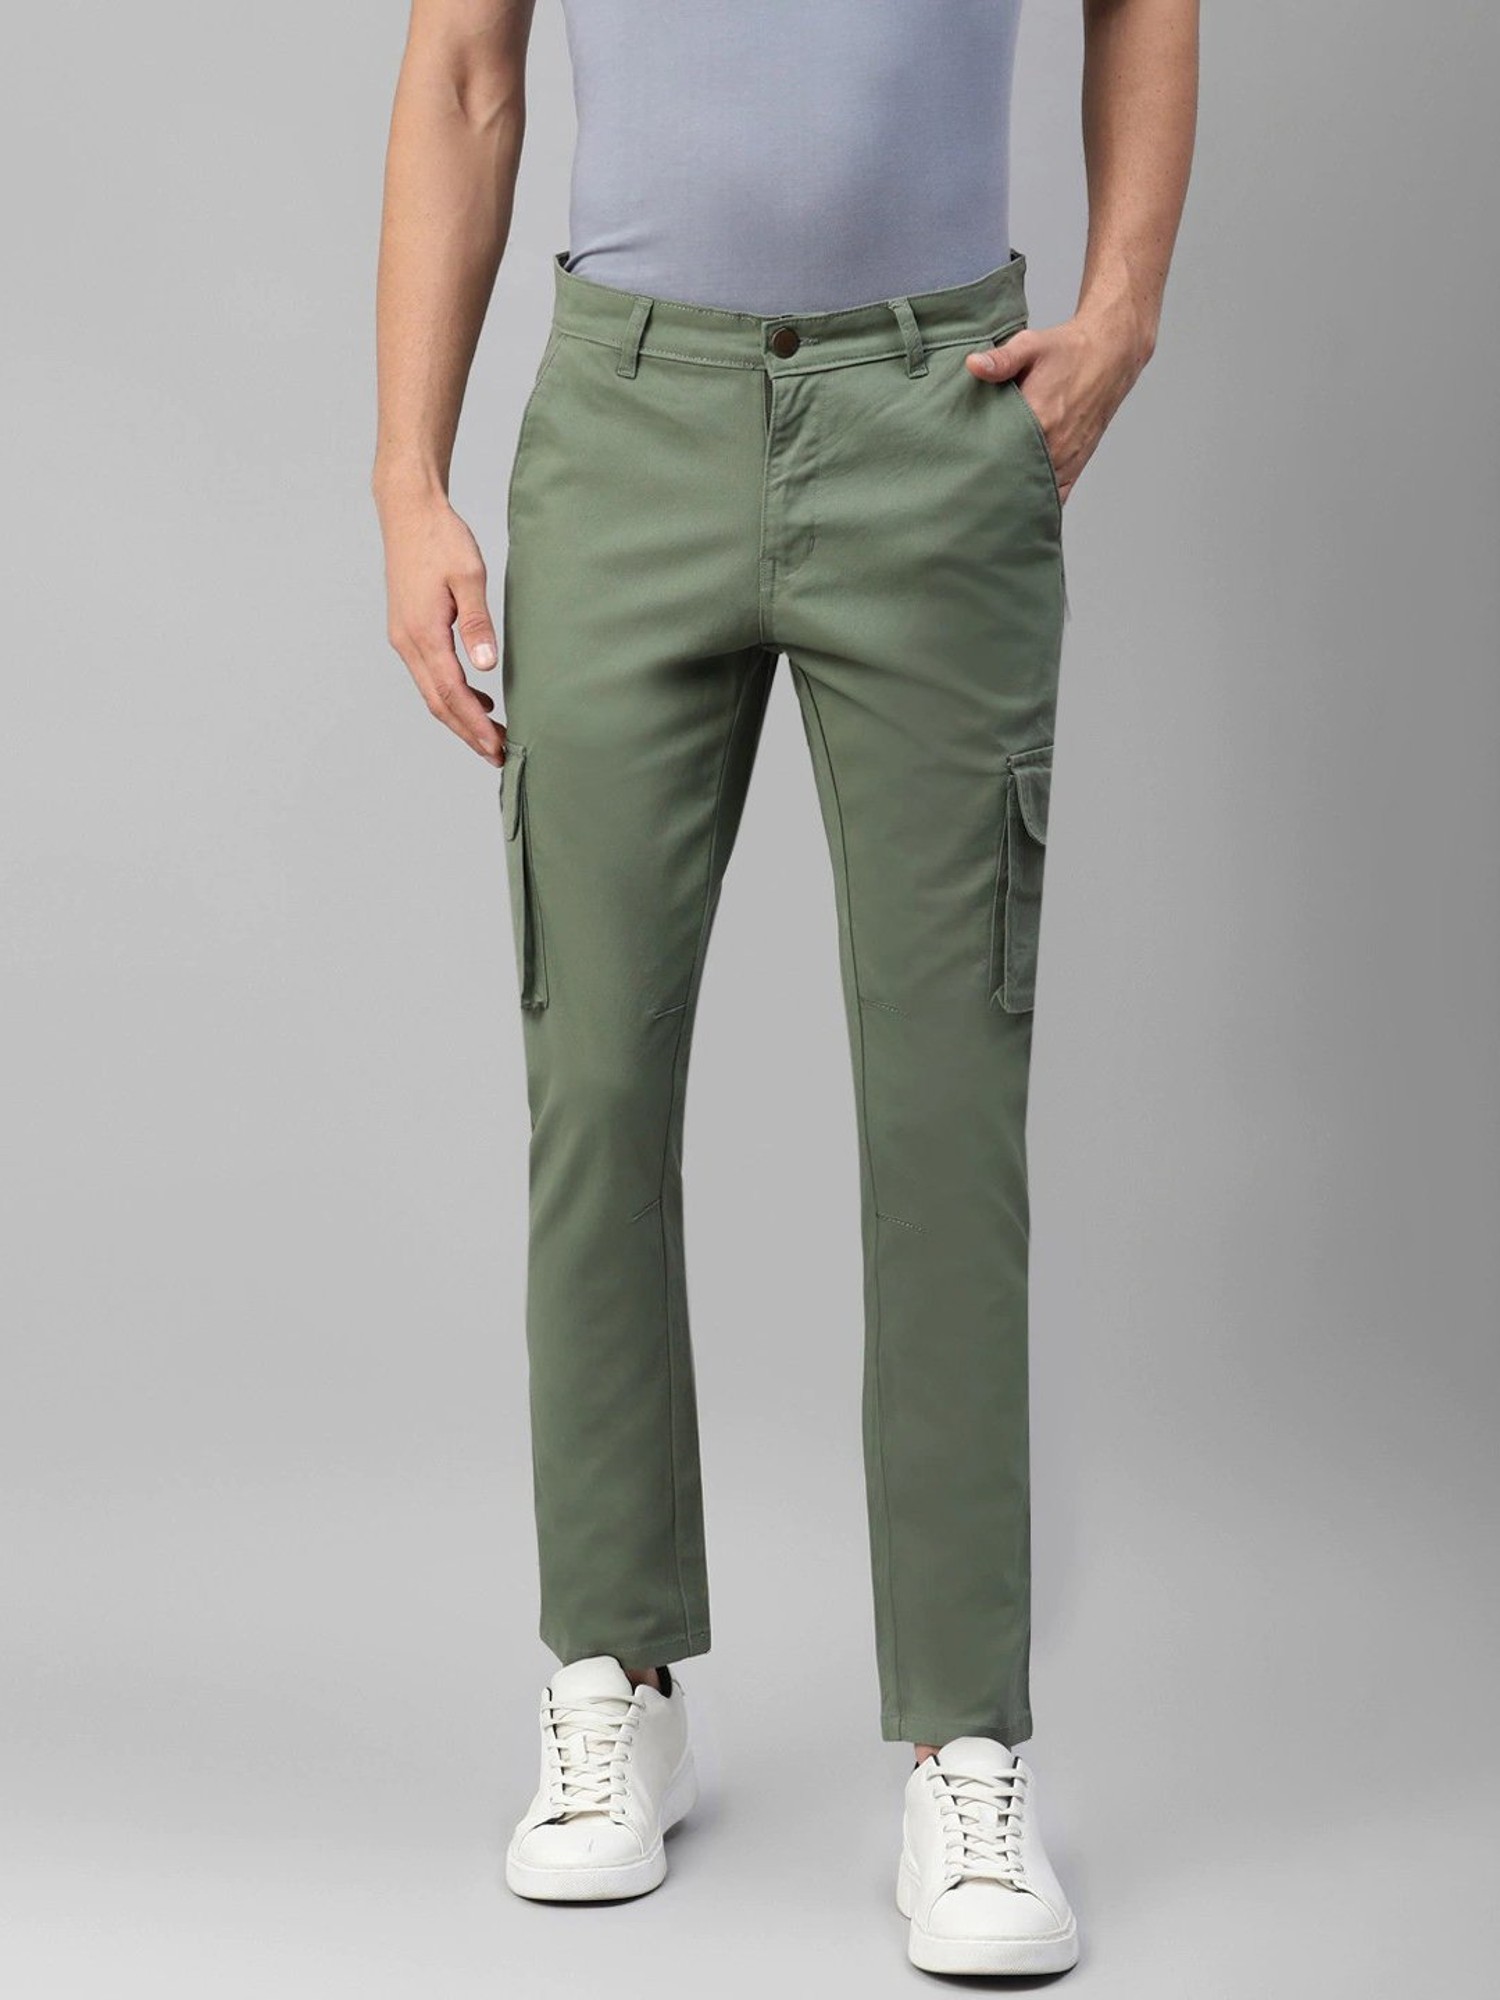 Hubberholme Men's Casual Trousers (HH-8002-30, Brown, 30) : Amazon.in:  Fashion